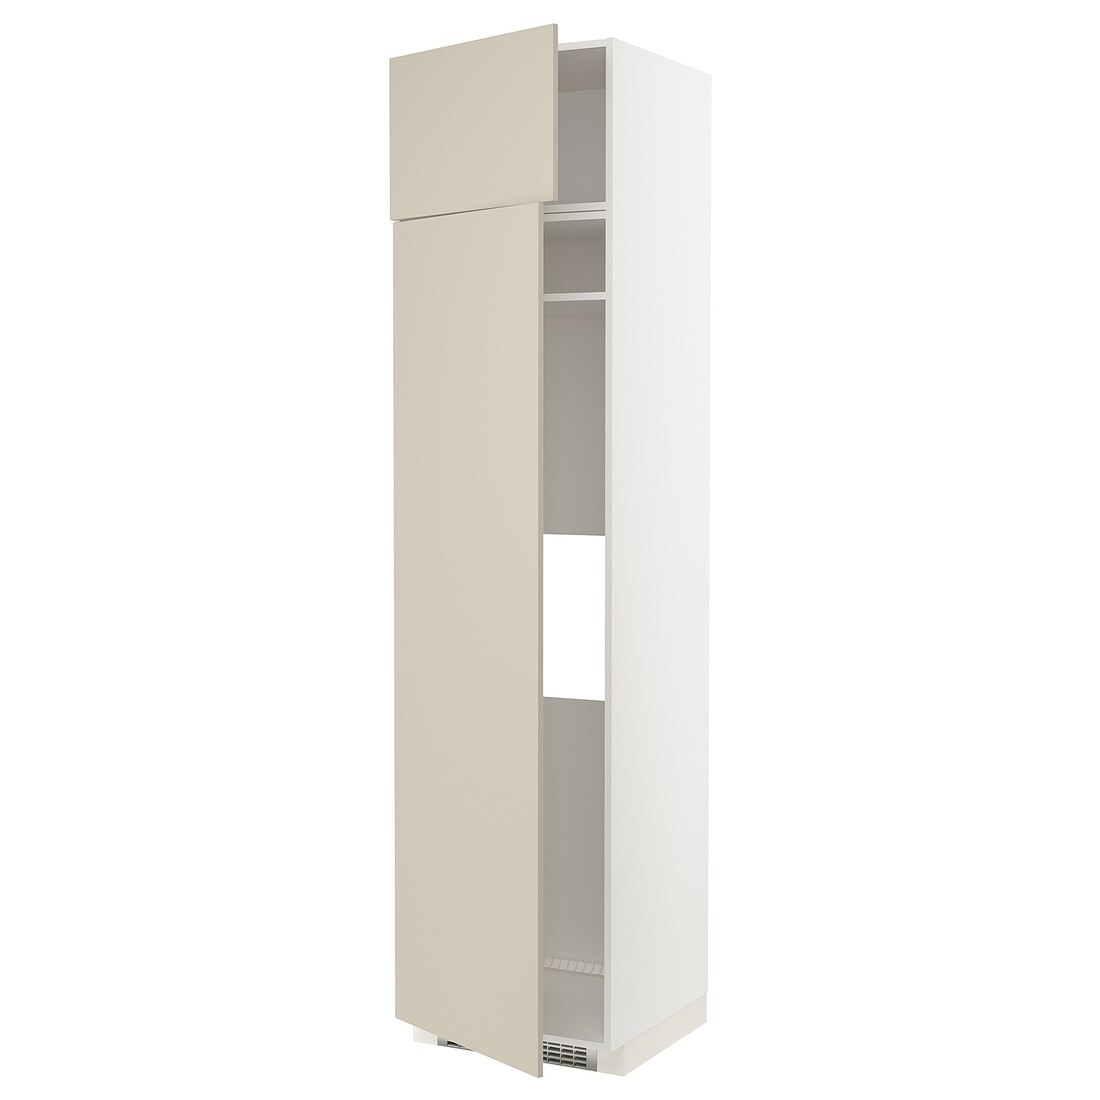 METOD МЕТОД Высокий шкаф для холодильника / морозильника, белый / Havstorp бежевый, 60x60x240 см